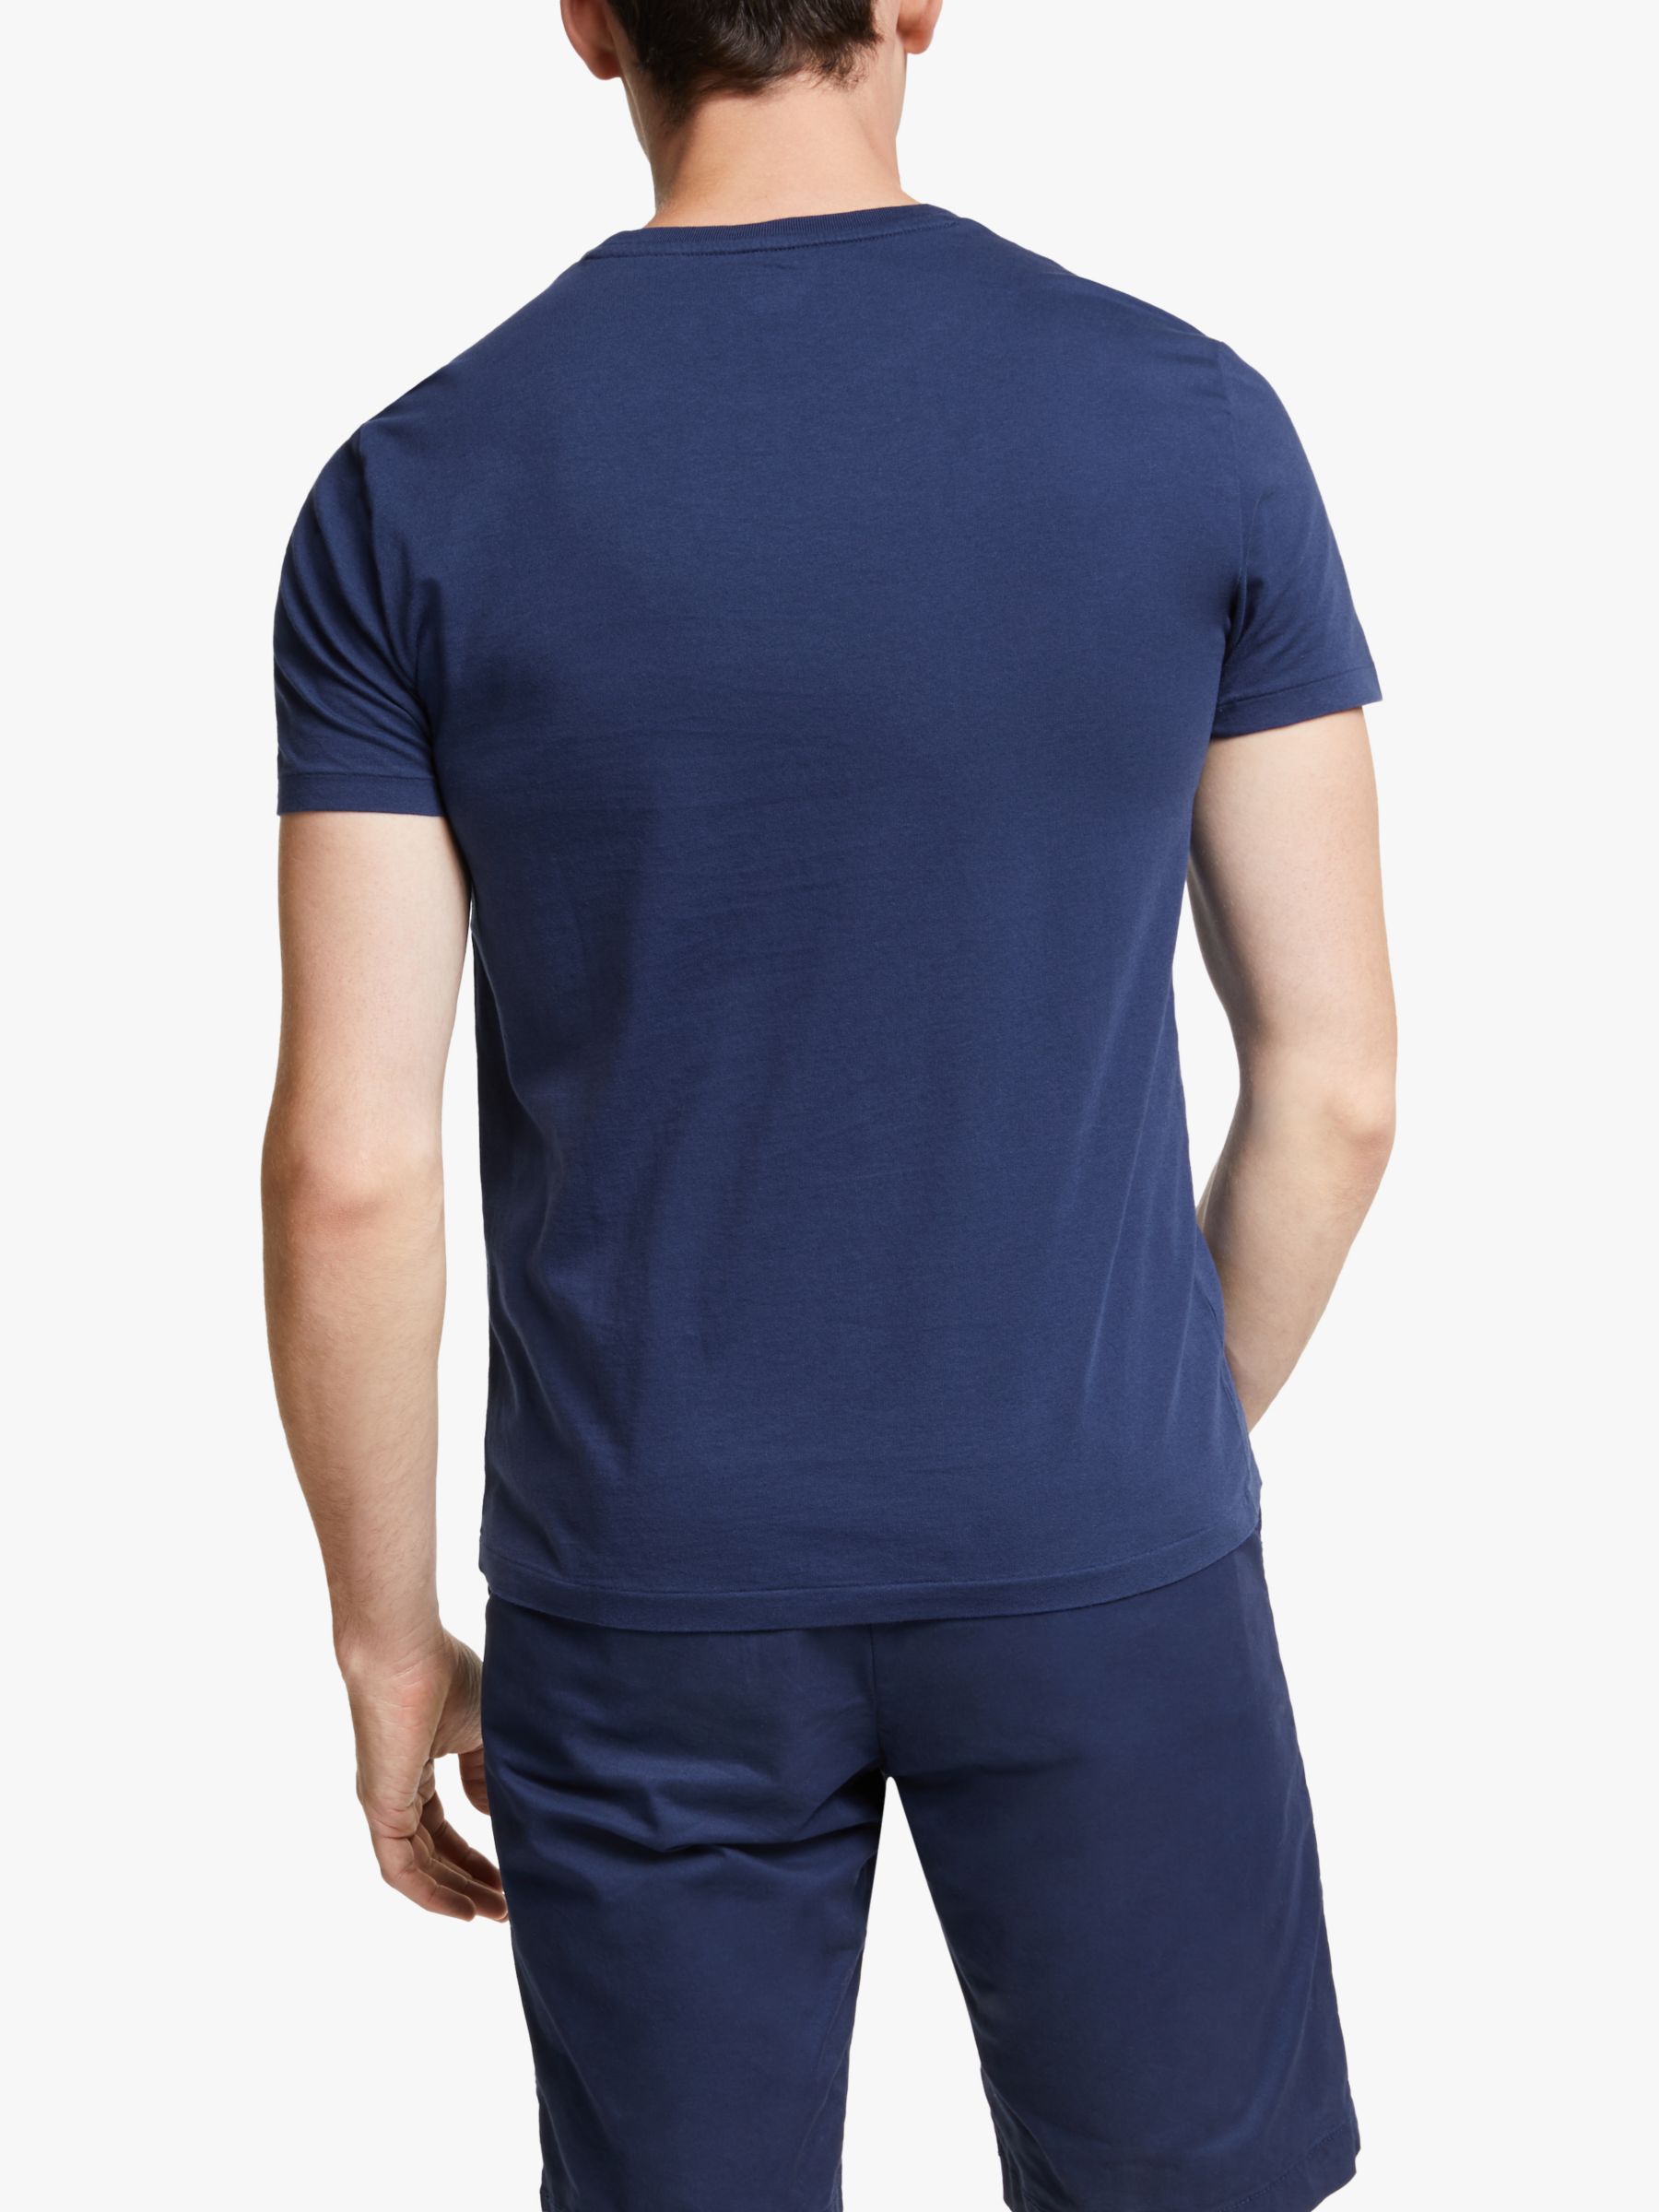 Polo Ralph Lauren Short Sleeve Custom Fit Crew Neck T-Shirt, Freshwater, S